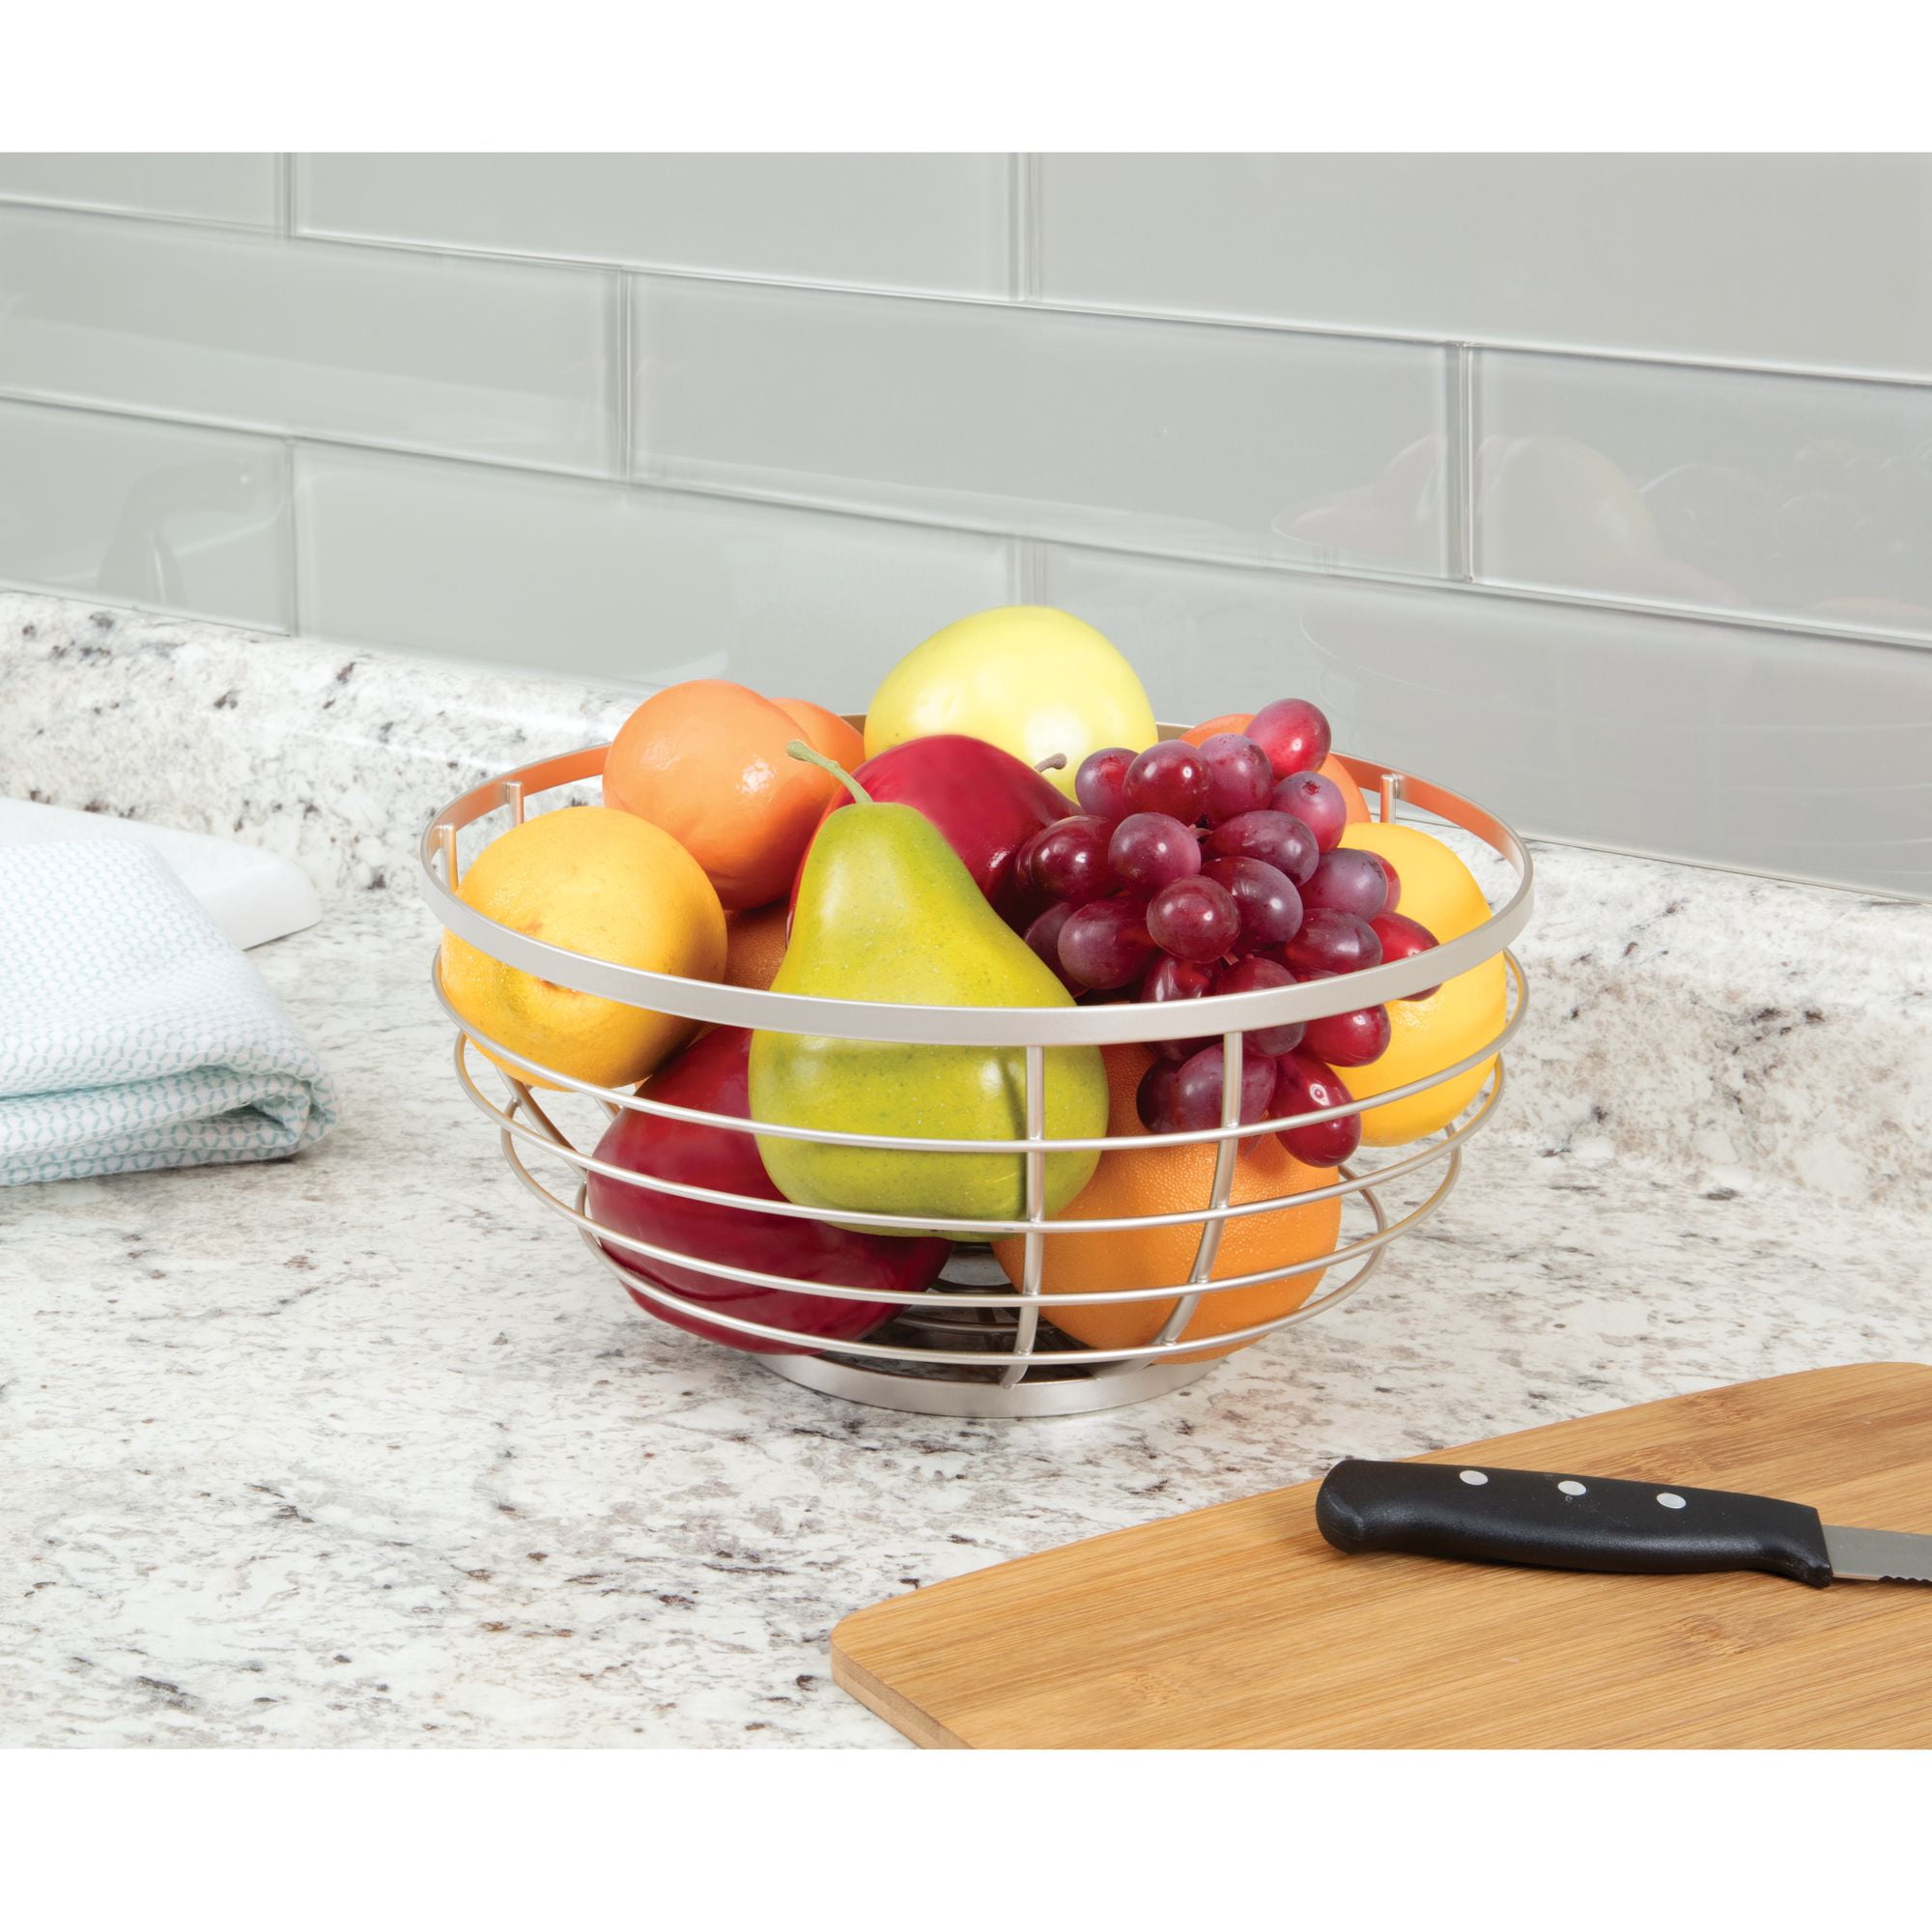 Matte Black iDesign Austin Wire Fruit Bowl with Hanger for Kitchen Countertop Storage 